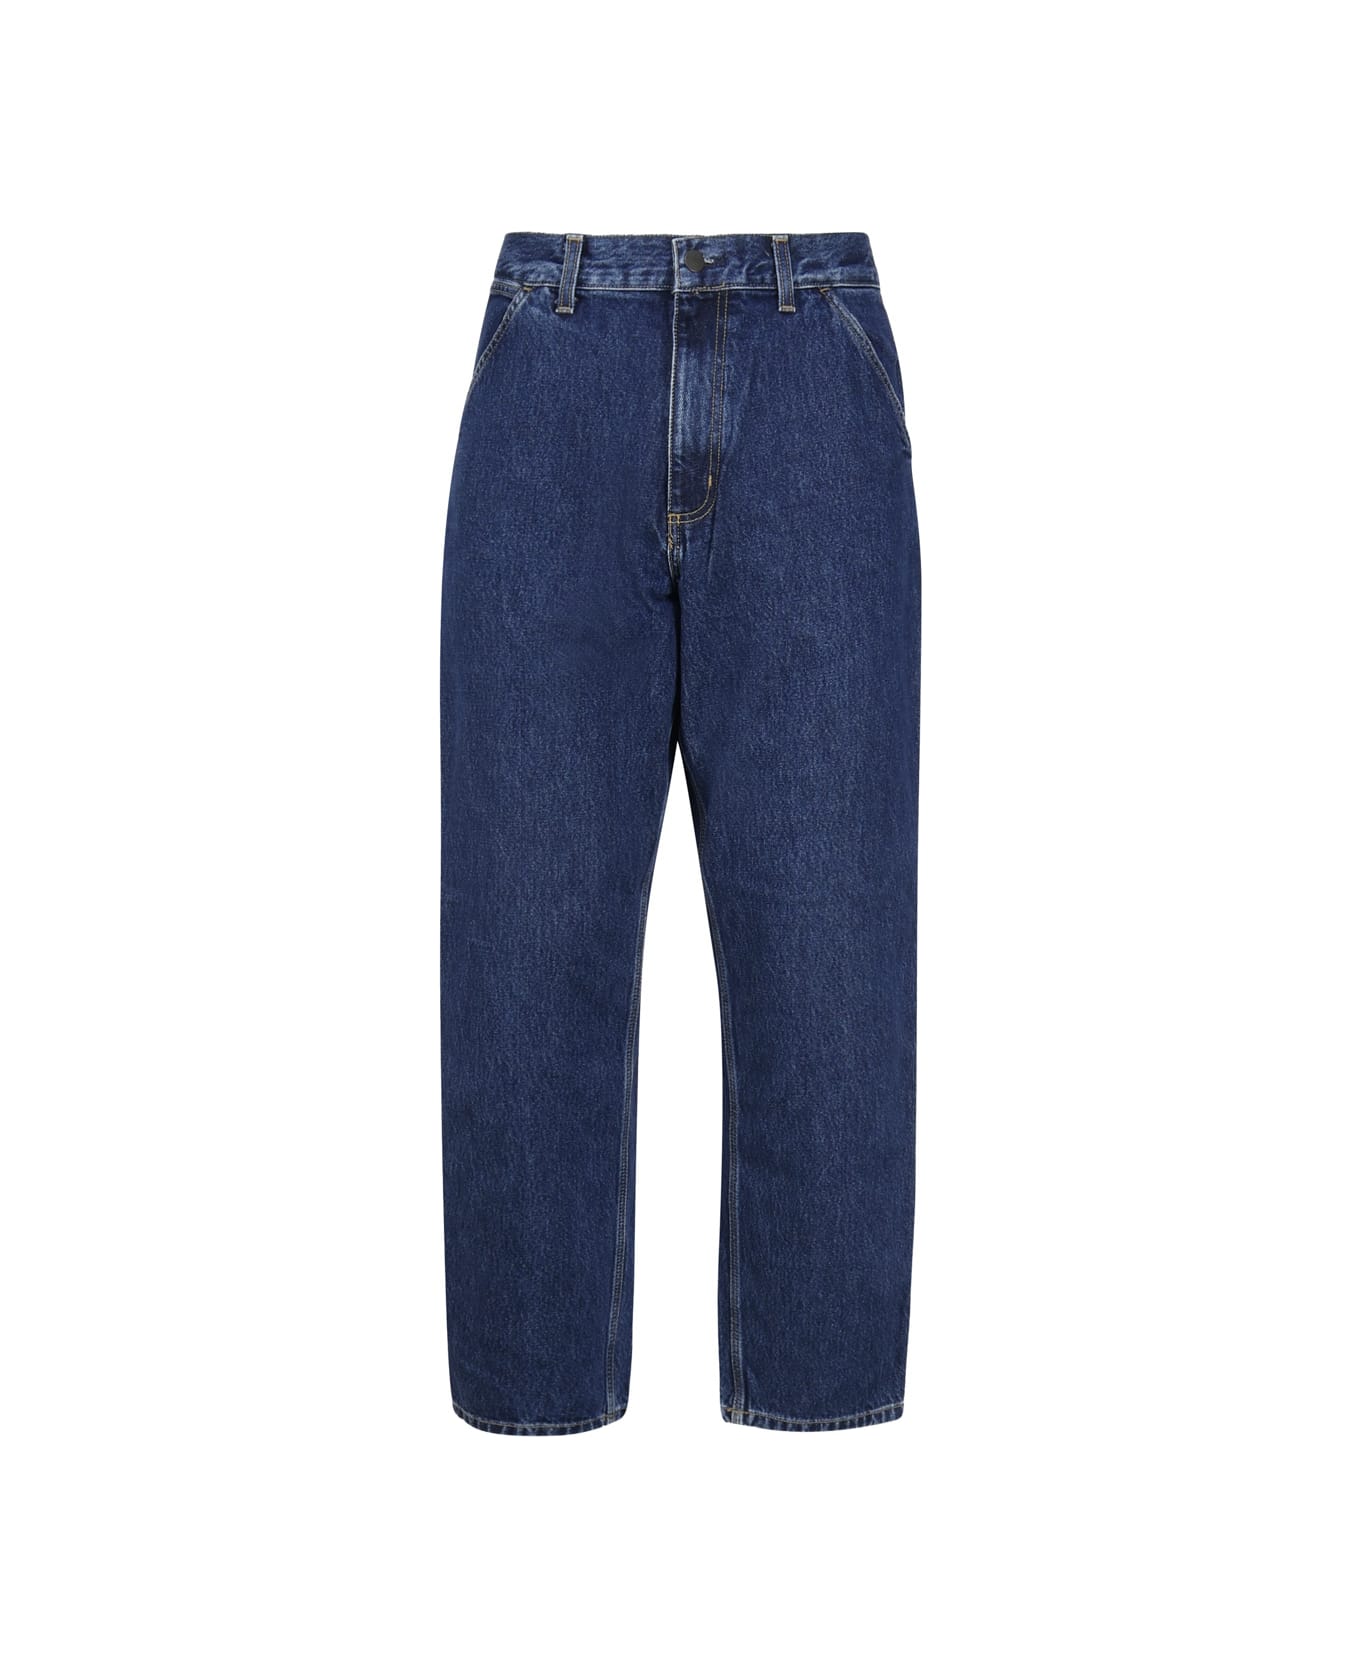 Carhartt Single Knee Jeans - Blue /stone washed